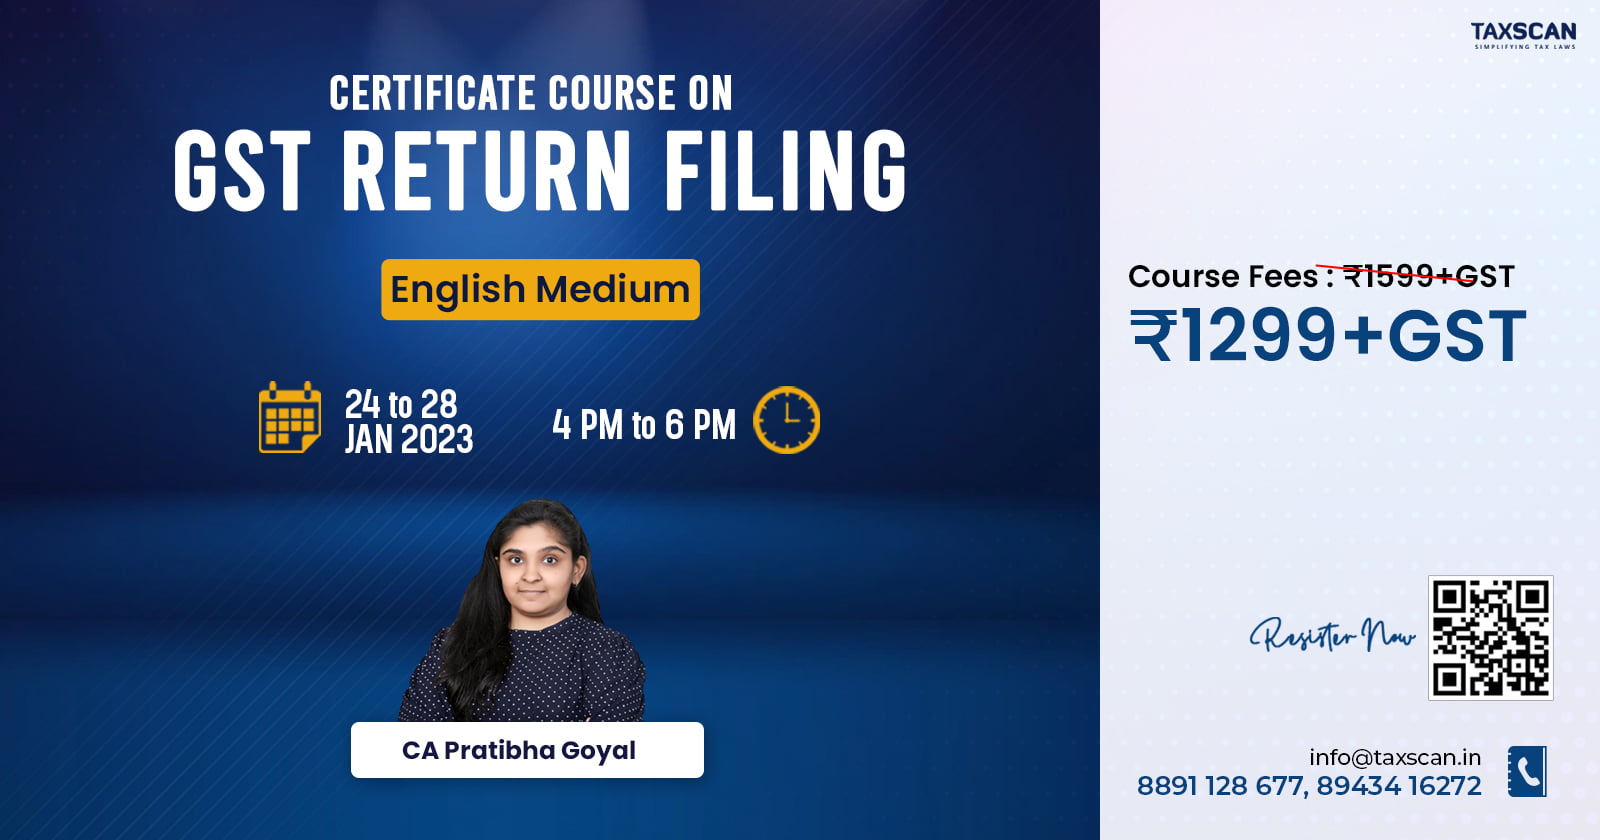 Certificate Course - Certificate Course on GST Return Filing - GST Return Filing - GST Return - GST - online certificate course - GST Course - Certificate Course 2023 - taxscan academy